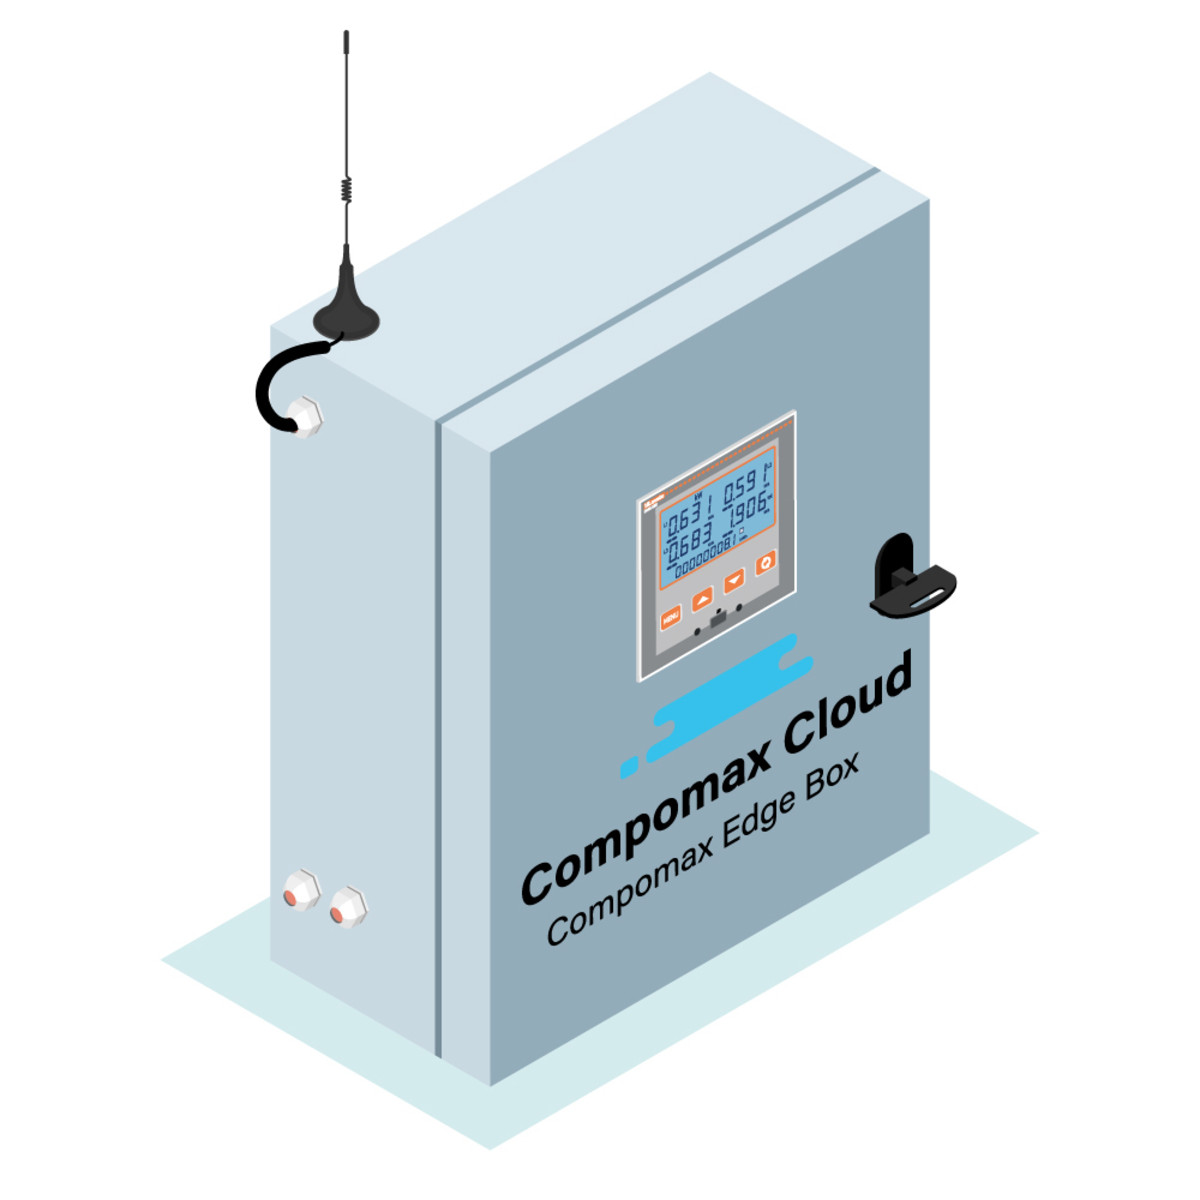 Compomax Edge Box illustration with Lovato Electric DMG610 meter